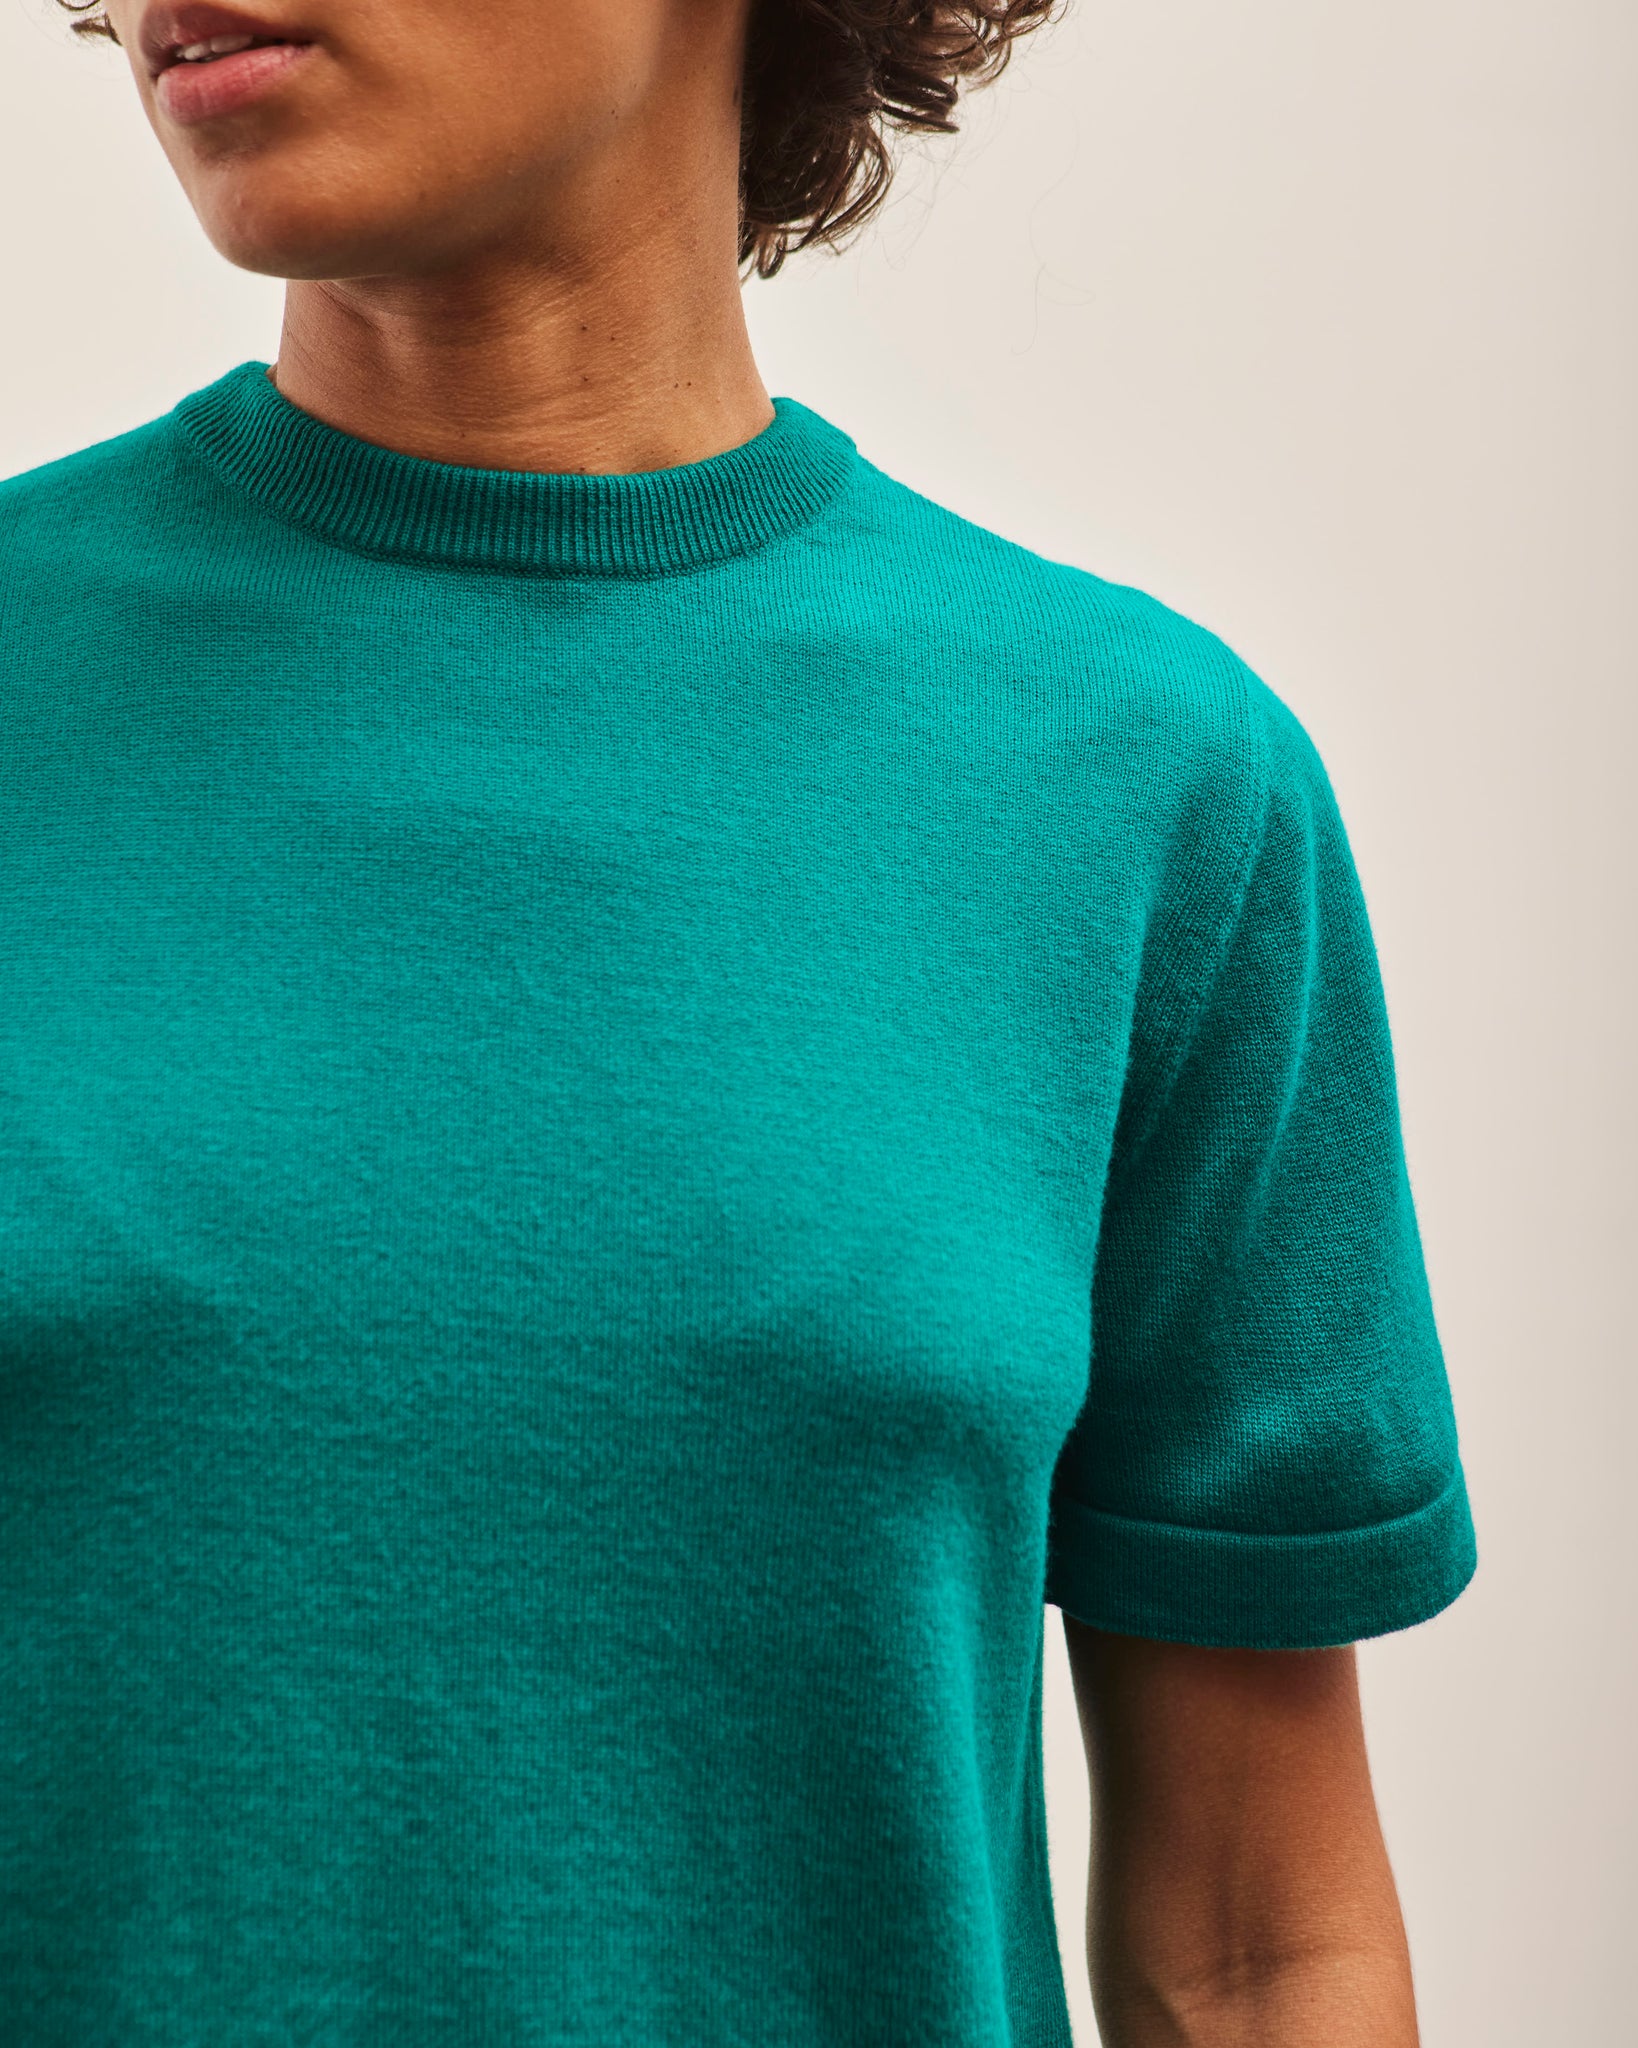 Cordera Merino Wool T-Shirt, Teal Green